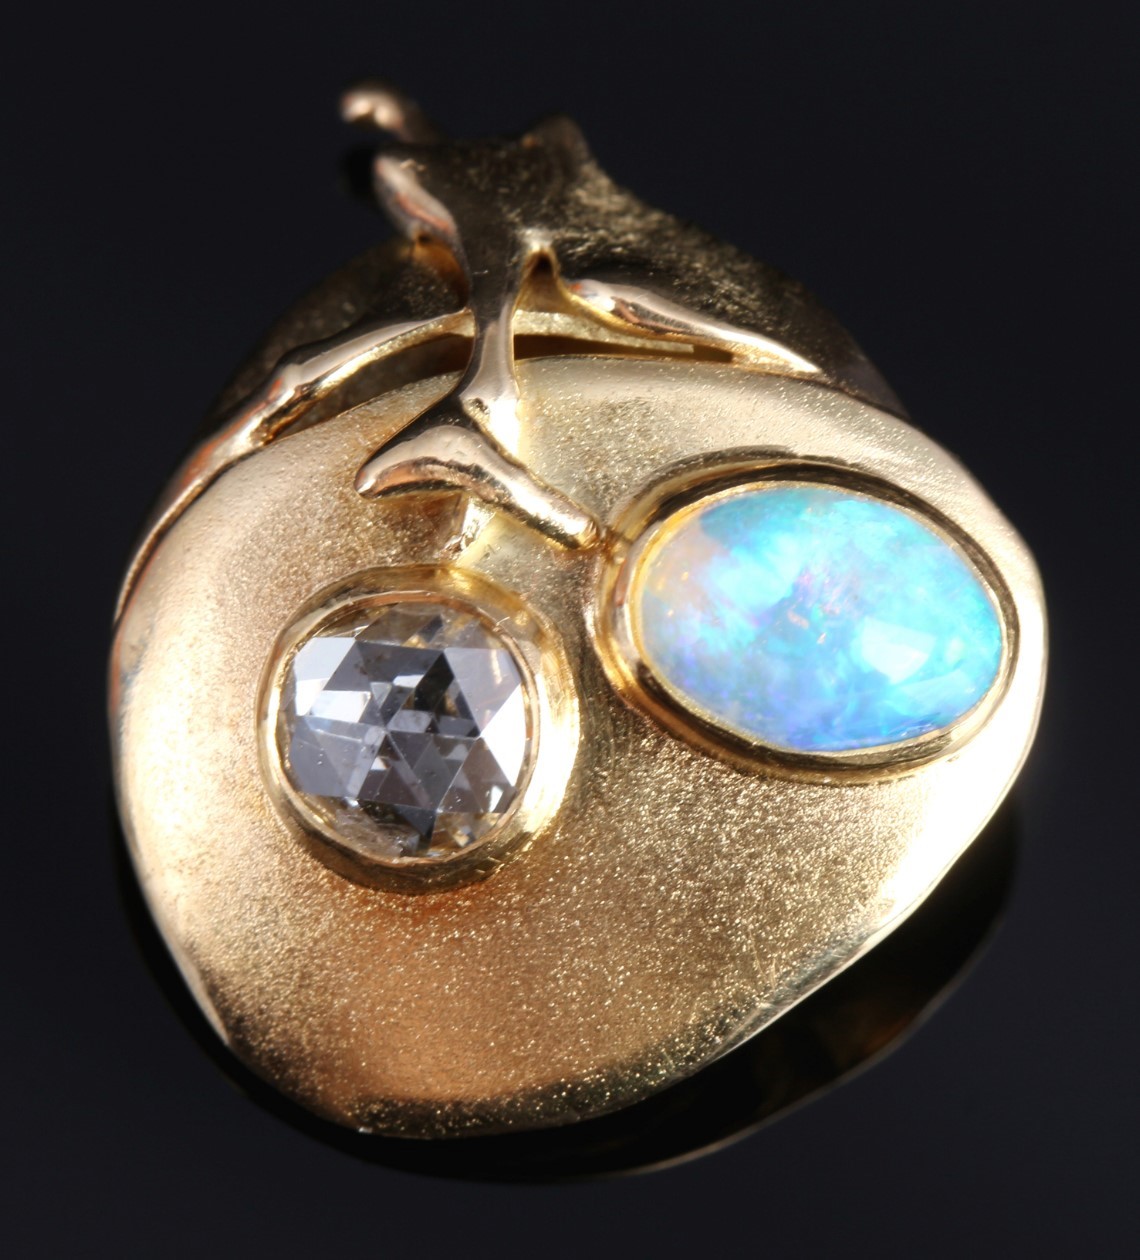 750 Gold Brosche mit Opal und Rosendiamant, 18K brooch with opal and rose diamond,